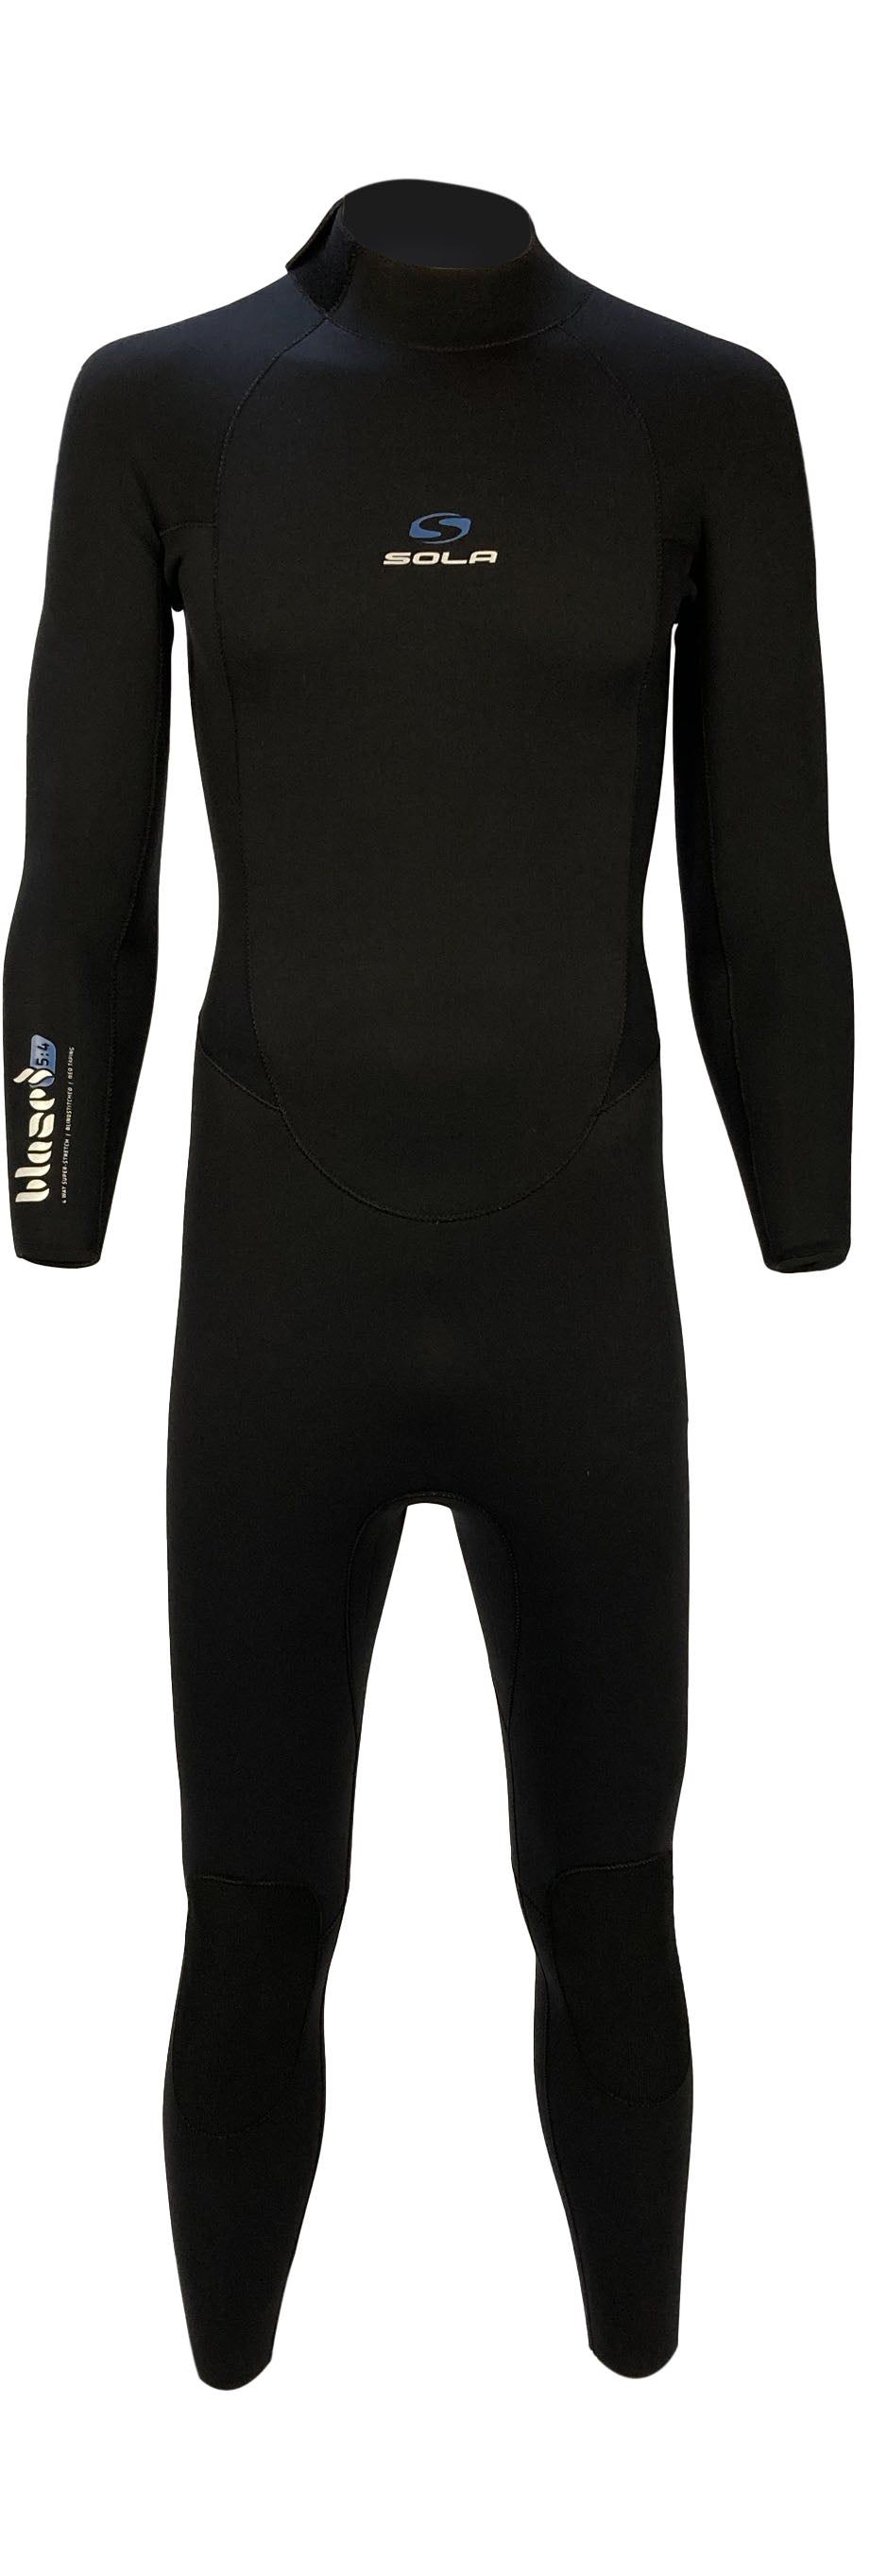 Sola Blaze Mens 5/4 winter wetsuit Black